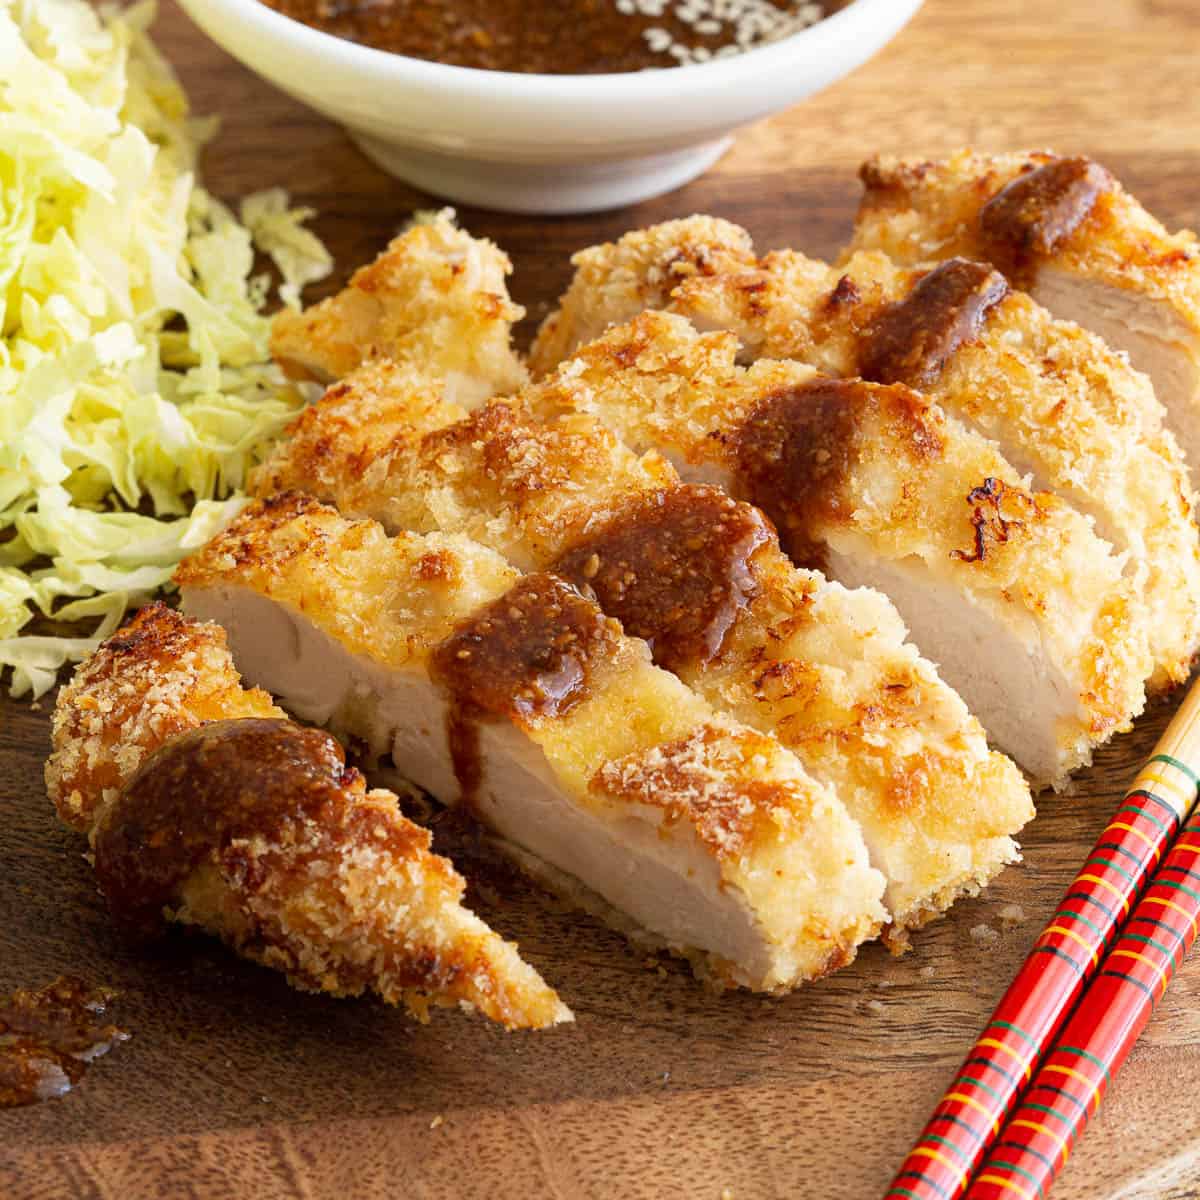 Panko crumbed katsu chicken with chopsticks, cabbage and tonkatsu sauce.